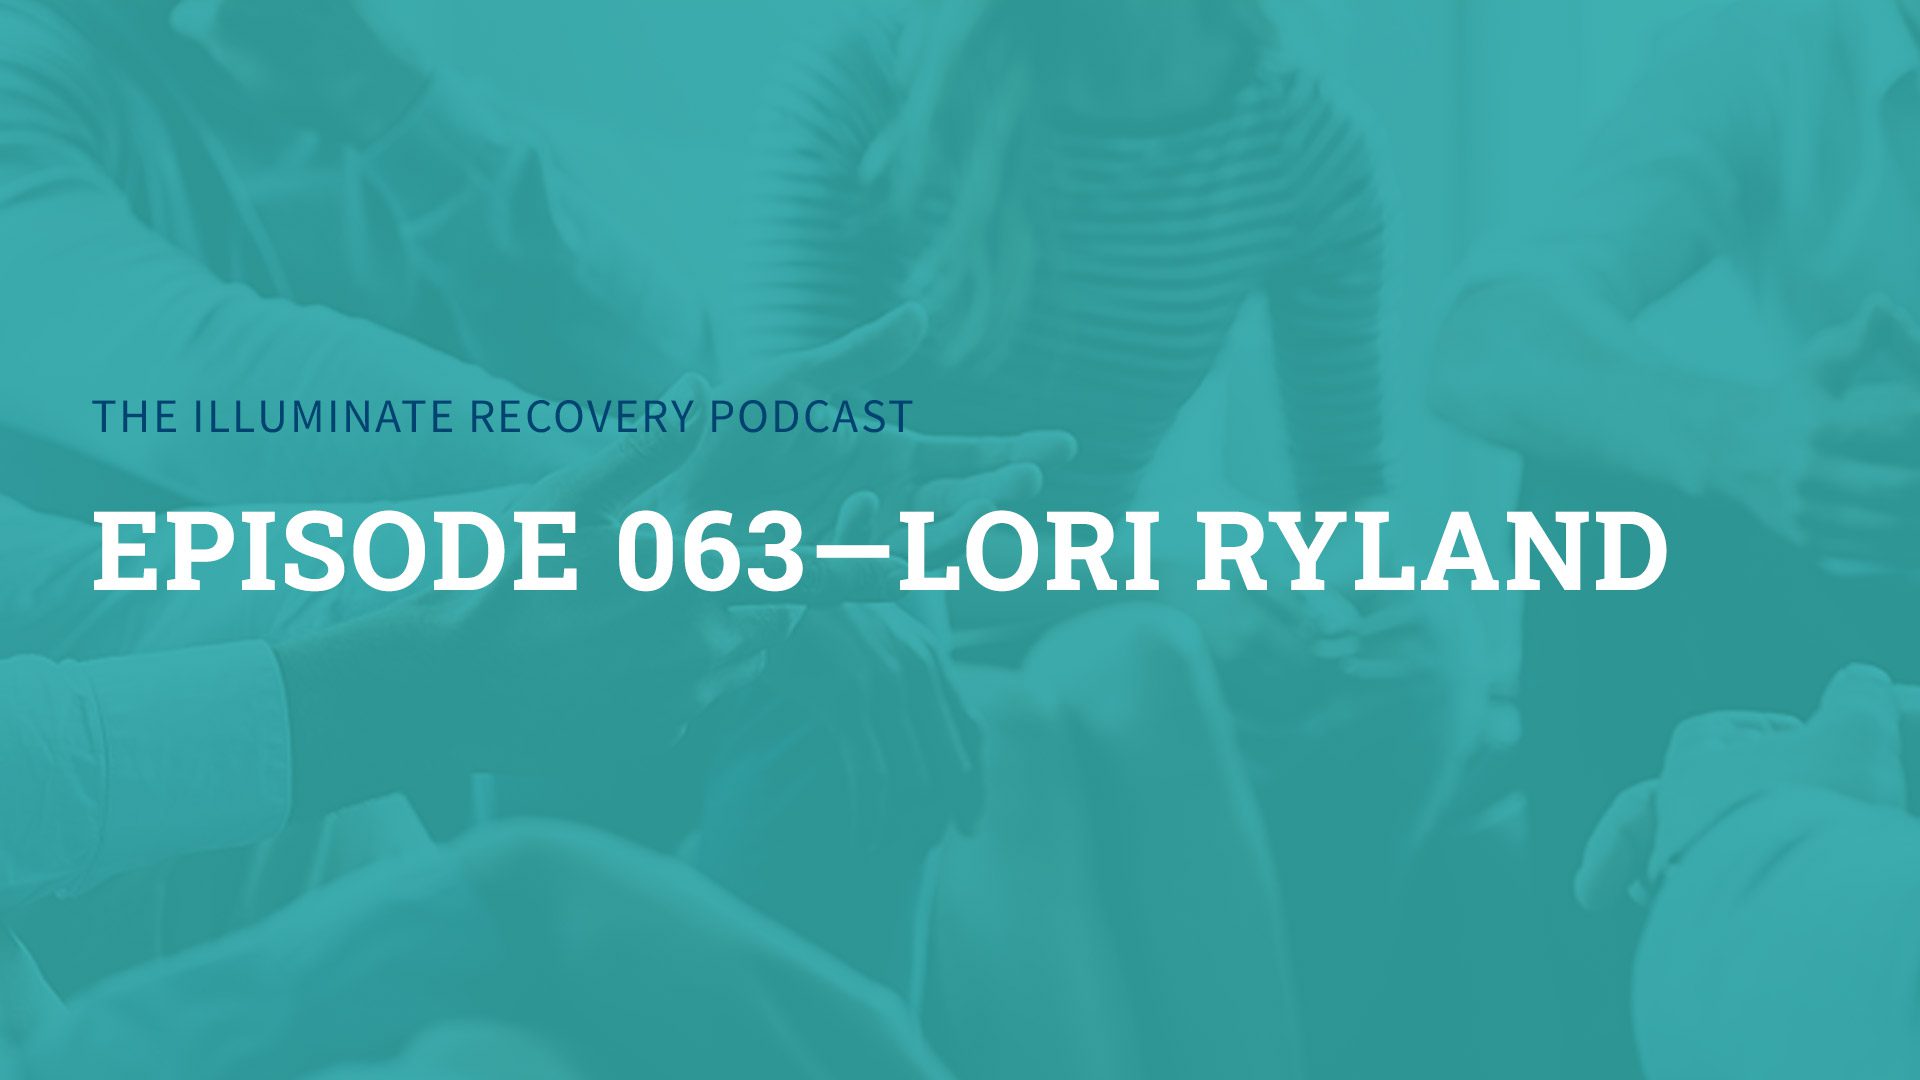 The Illuminate Recovery Podcast: Episode 063—Lori Ryland